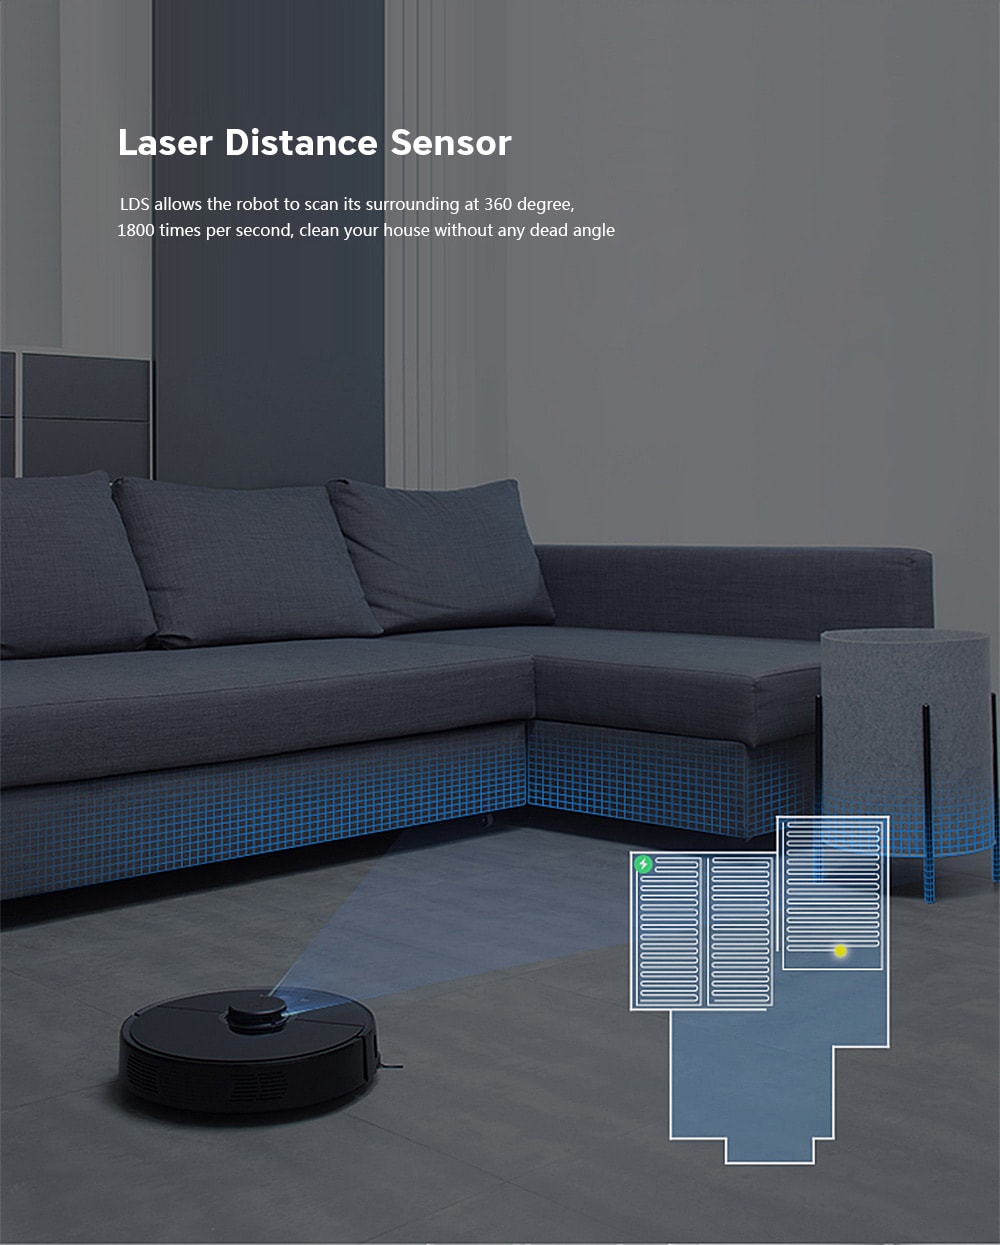 Roborock S55 Smart Vacuum Cleaner Intelligent Sensor System Path Planning- Black EU Plug